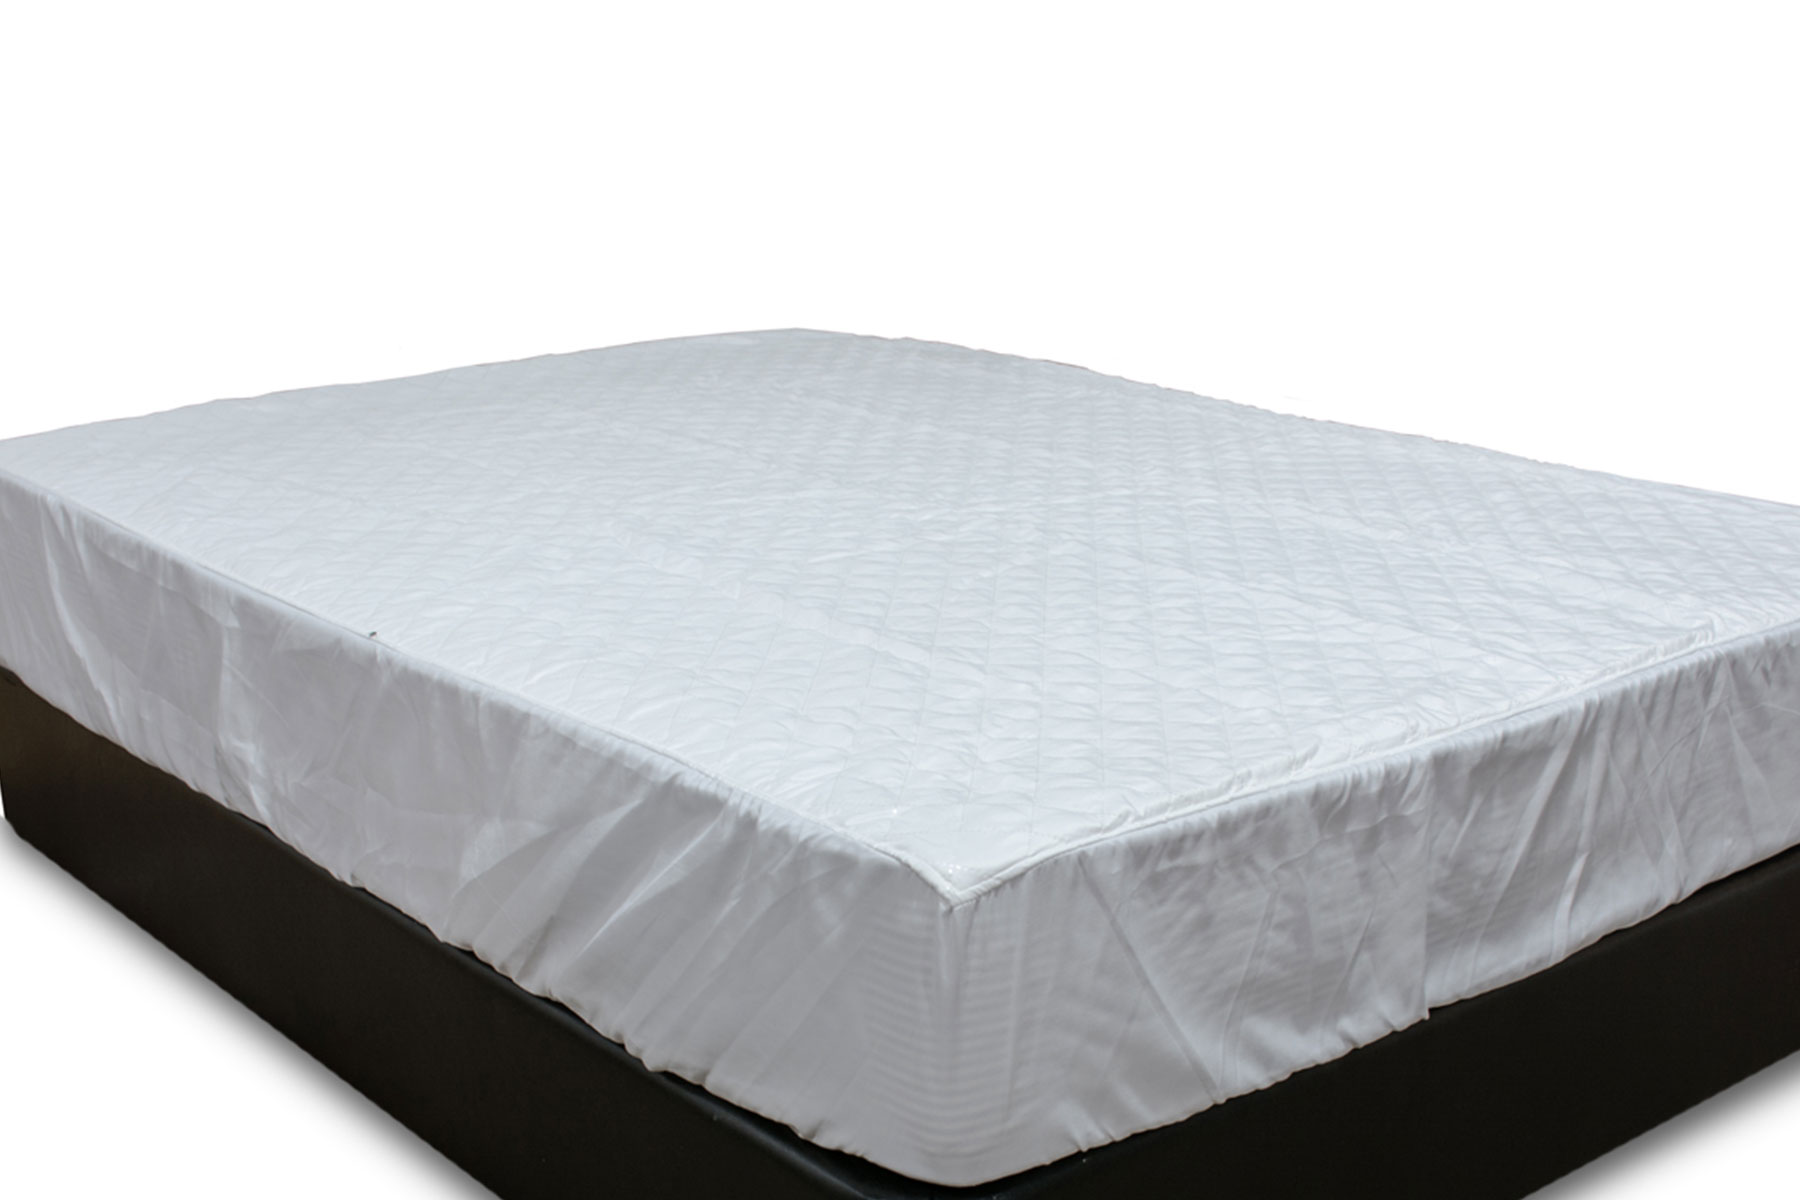 spots on mattress protector